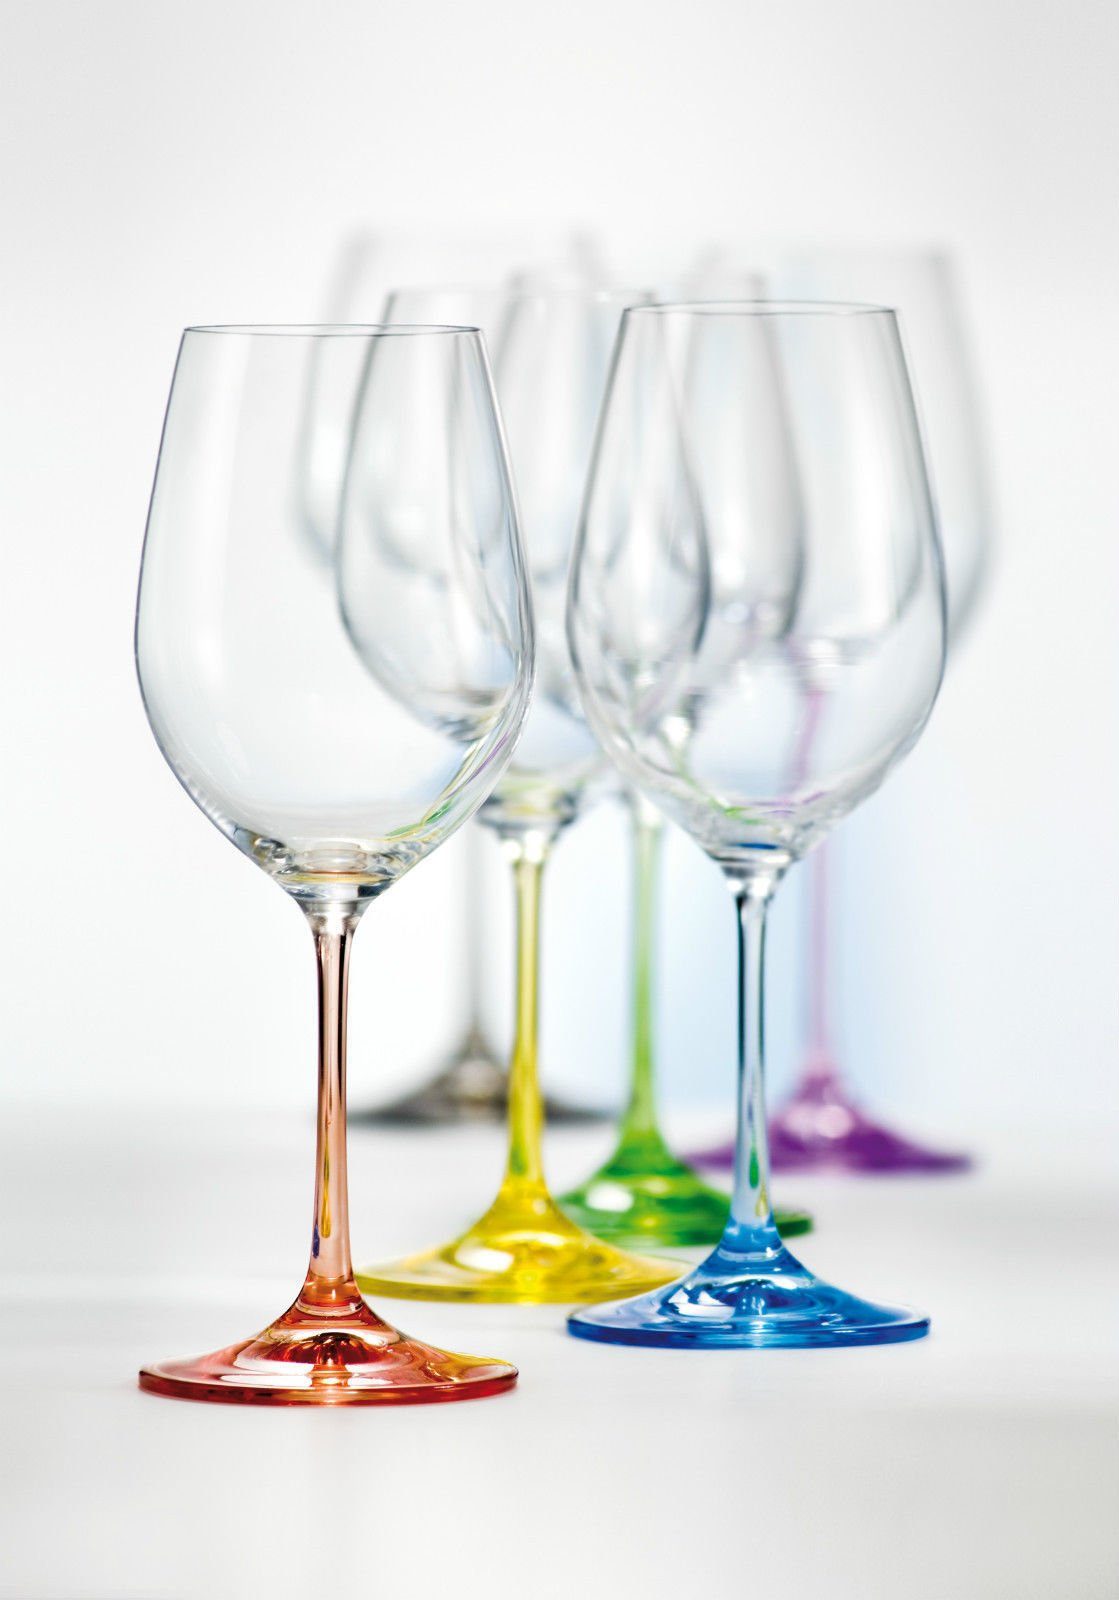 Crystalex Rotweinglas Rainbow 550 ml, Kristallglas, Kristallglas, farbig: gelb, grün, blau, lila, grau, rot, Bohemia